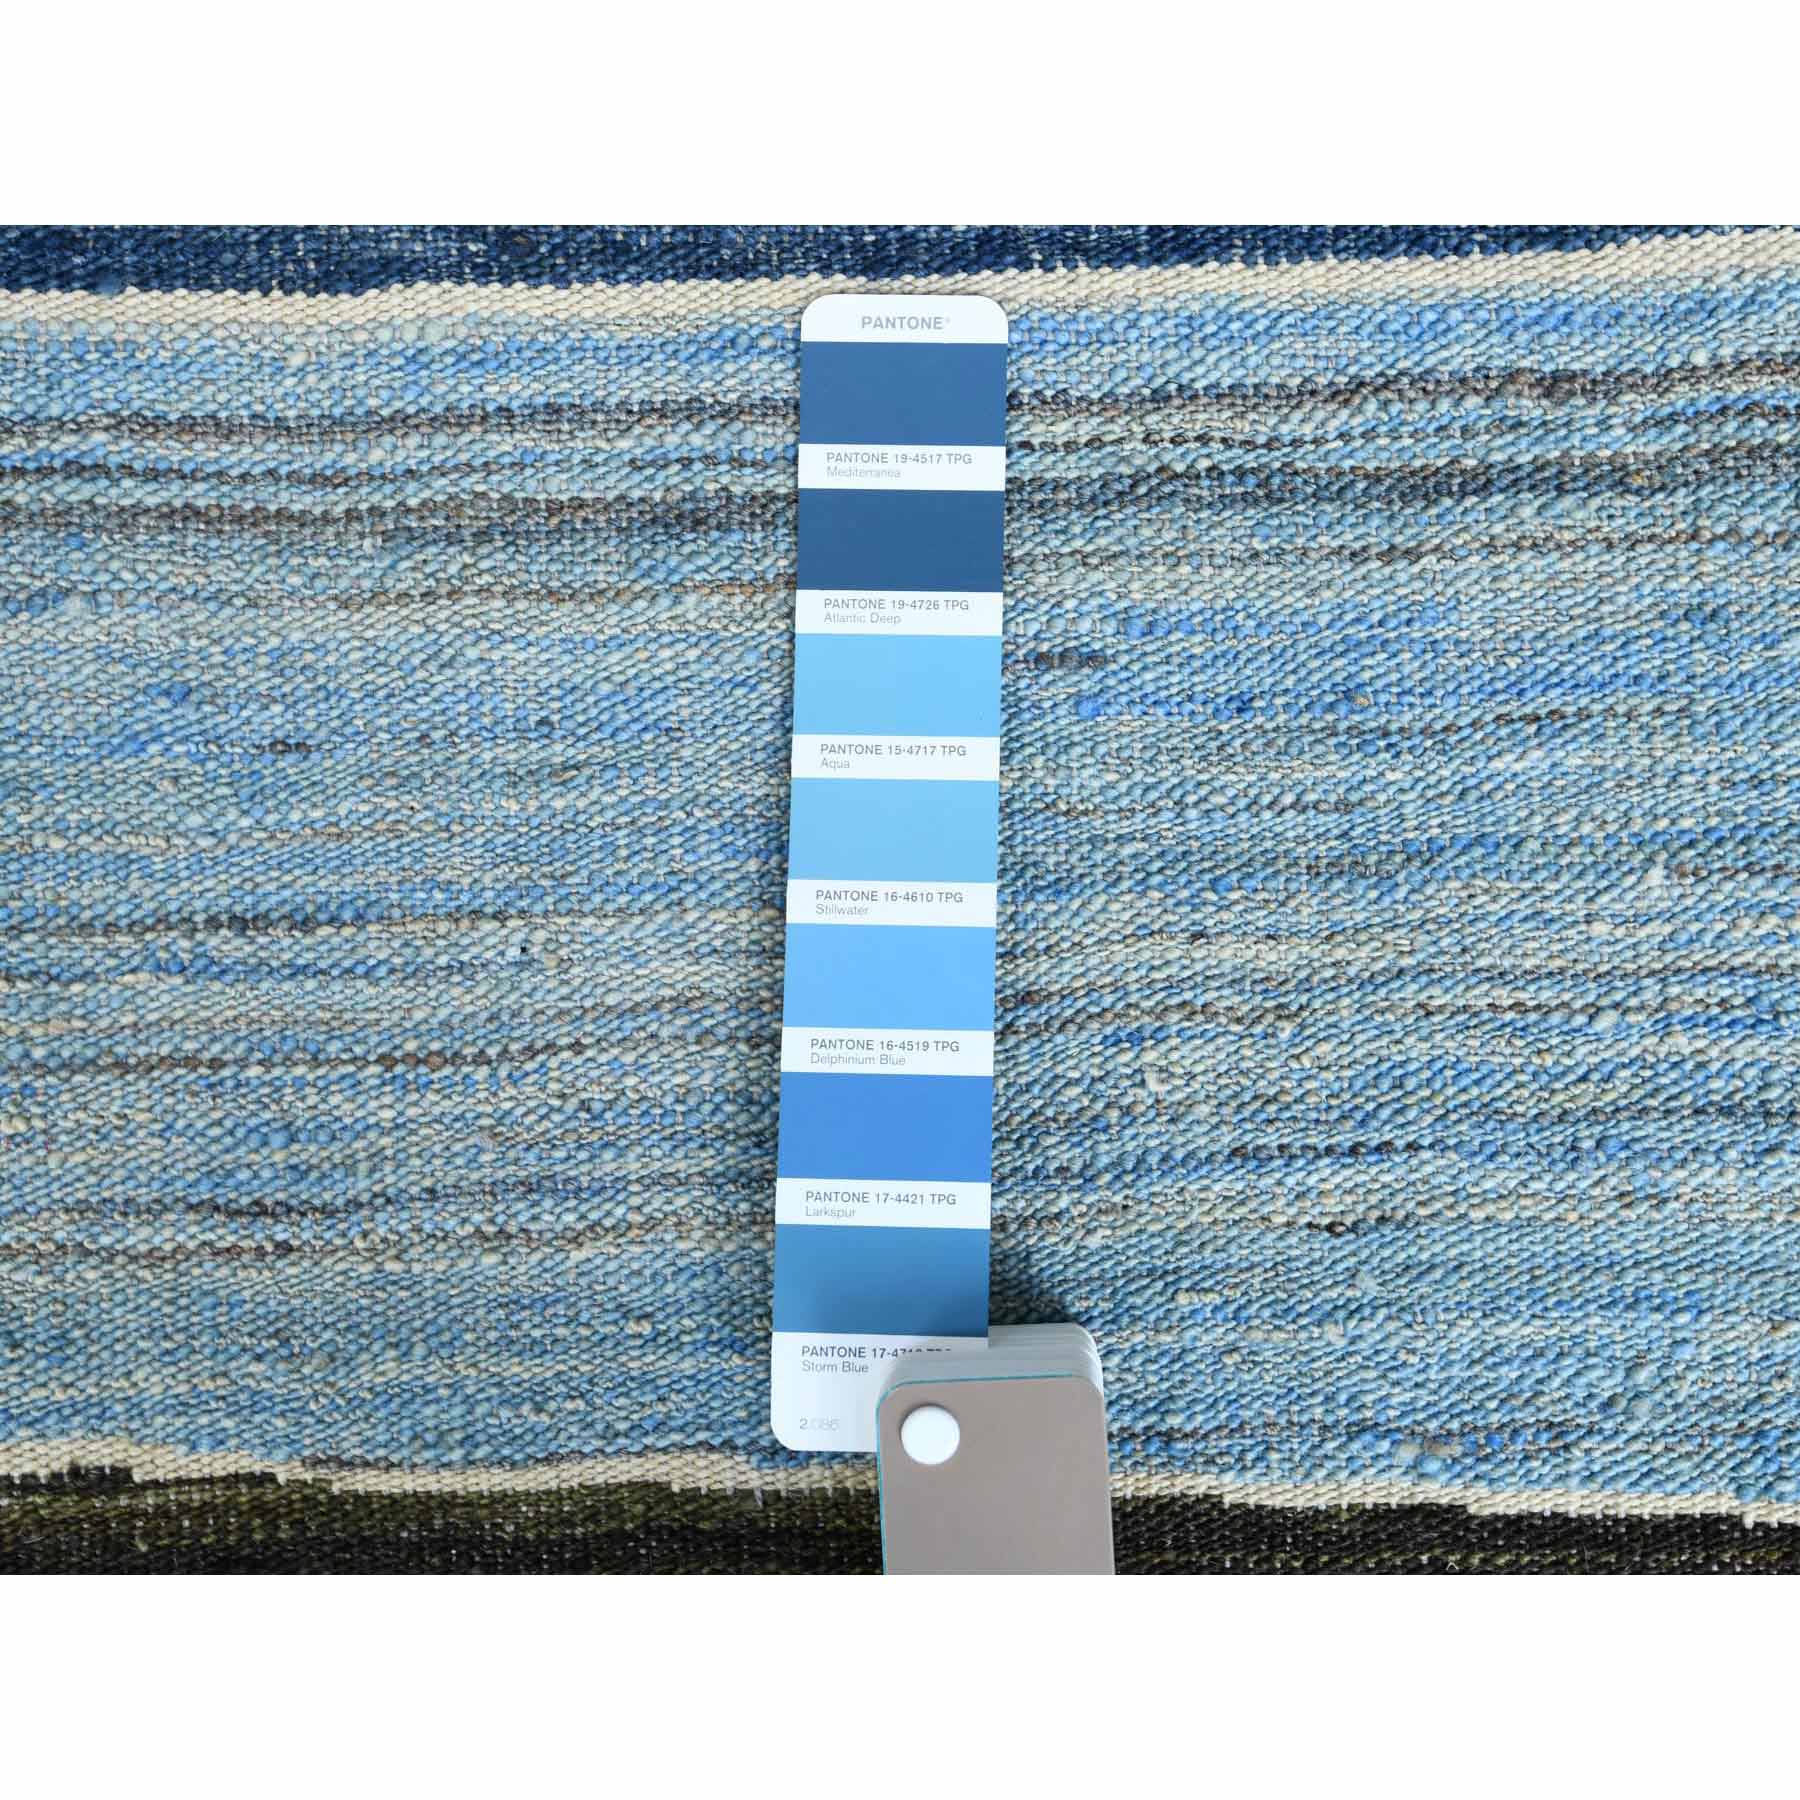 Flat-Weave-Hand-Woven-Rug-300525